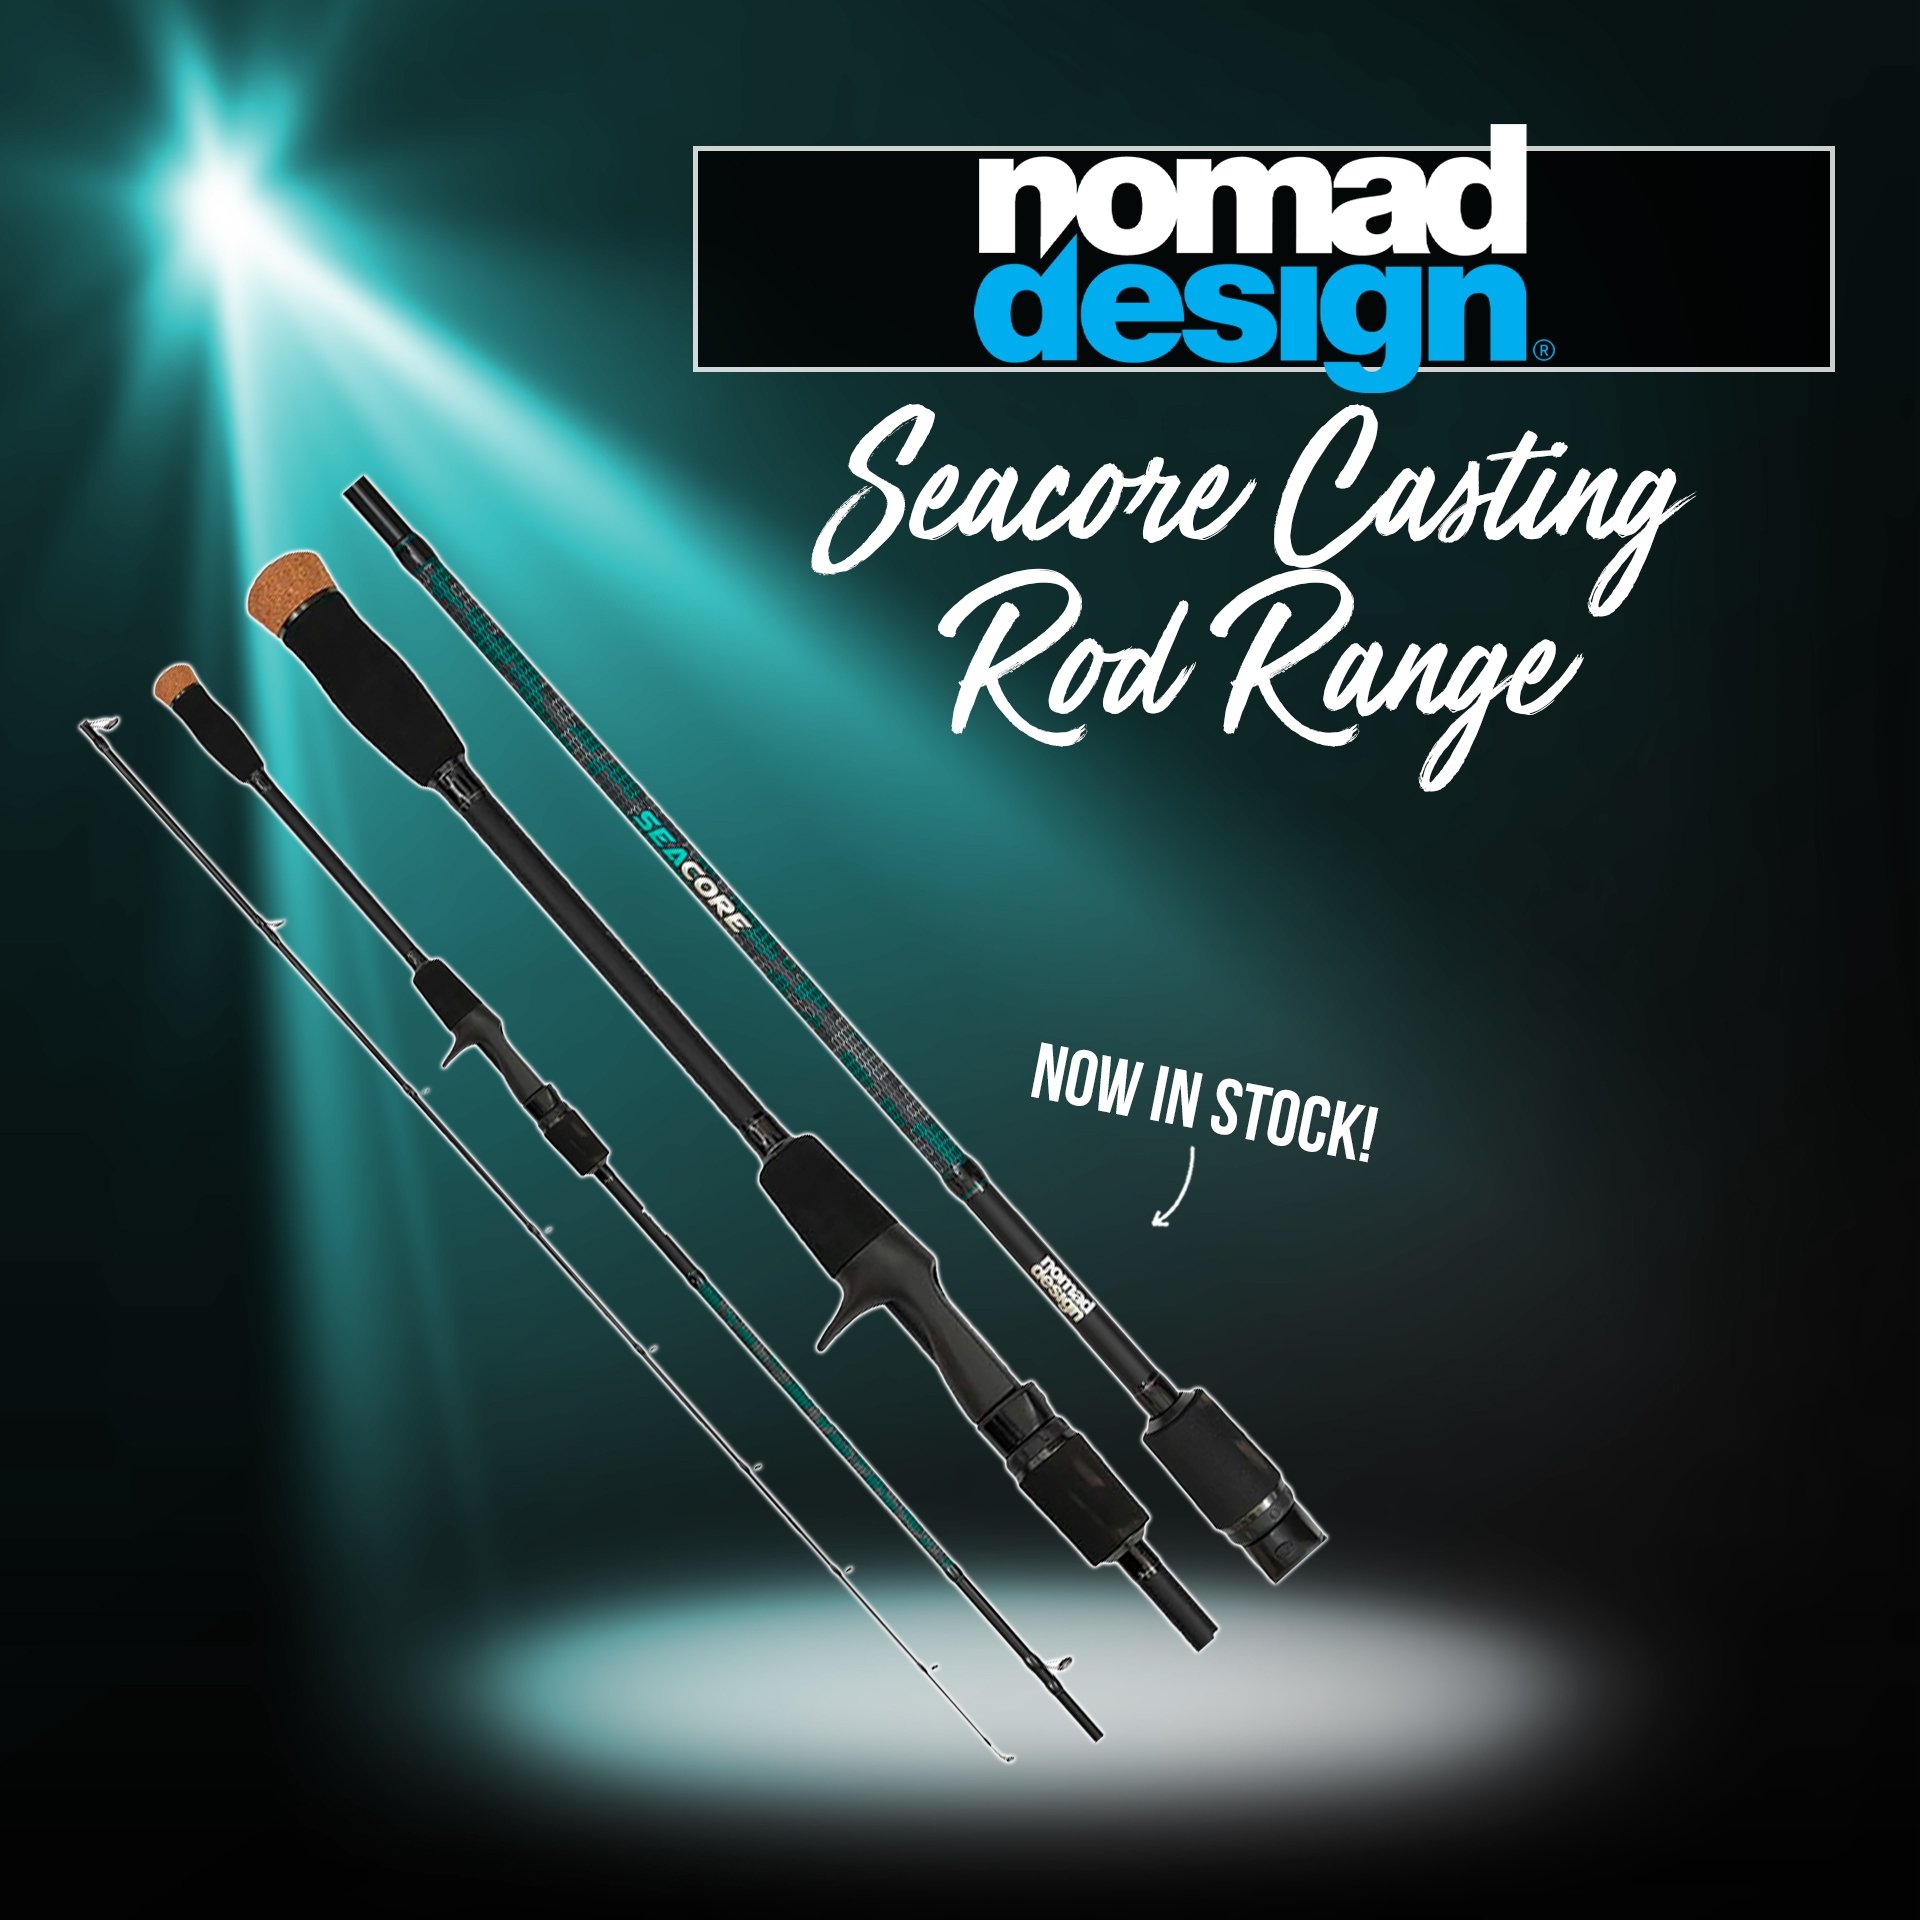 New - Nomad Design Seacore Casting Rod